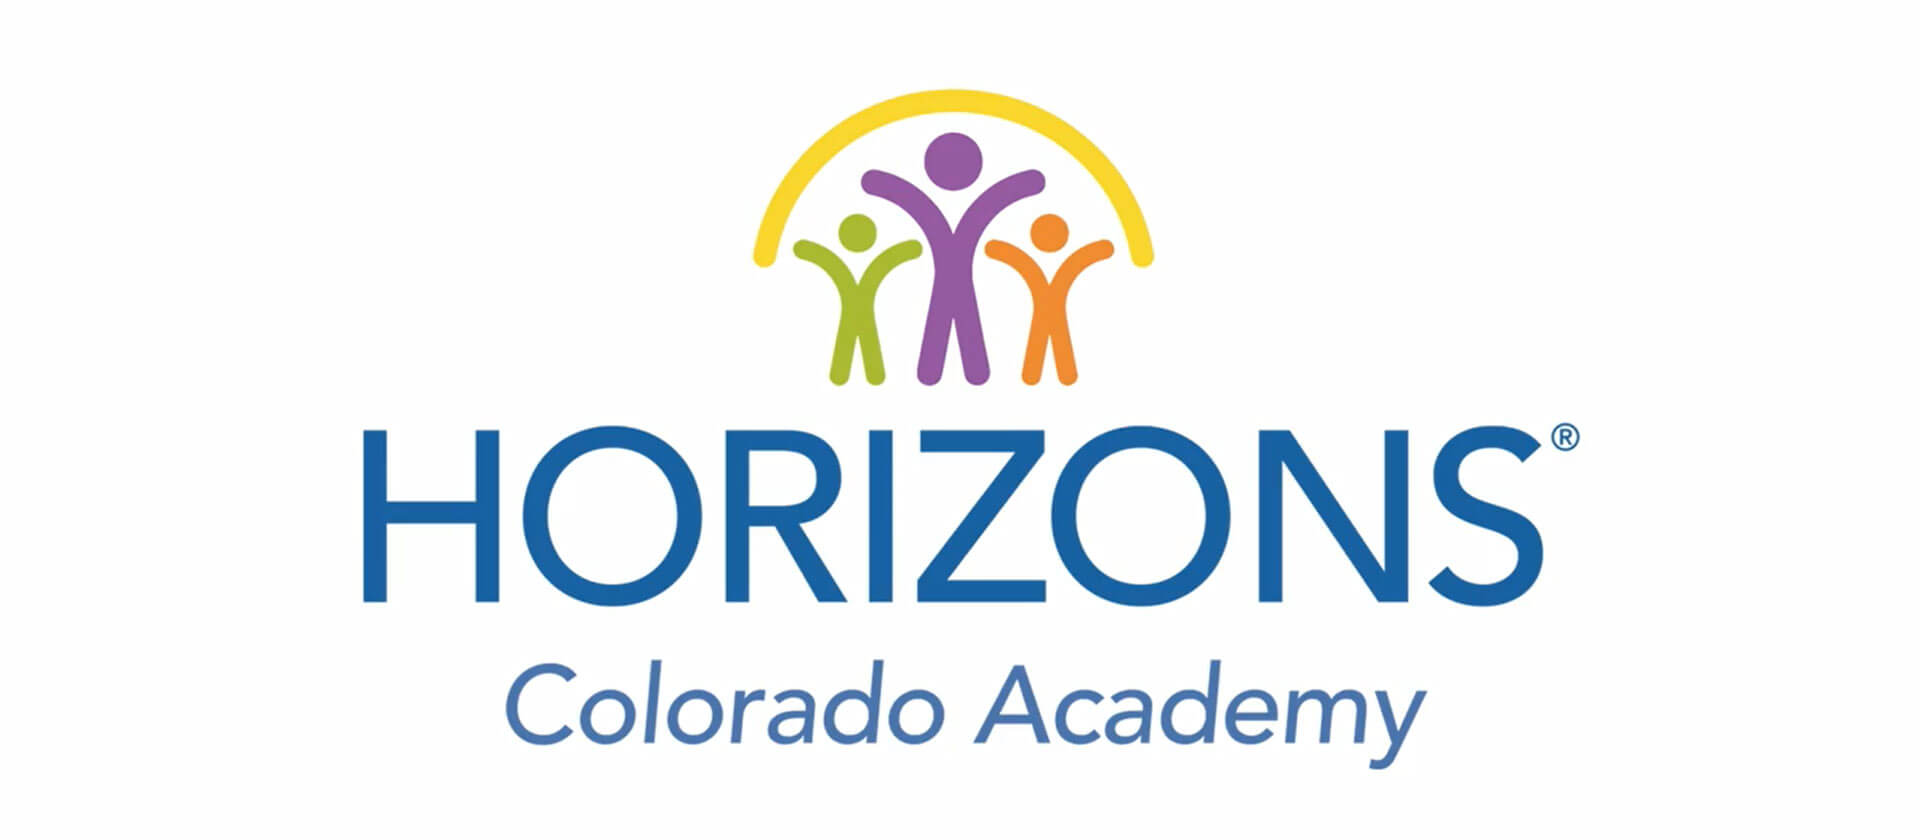 Horizons at Colorado Academy